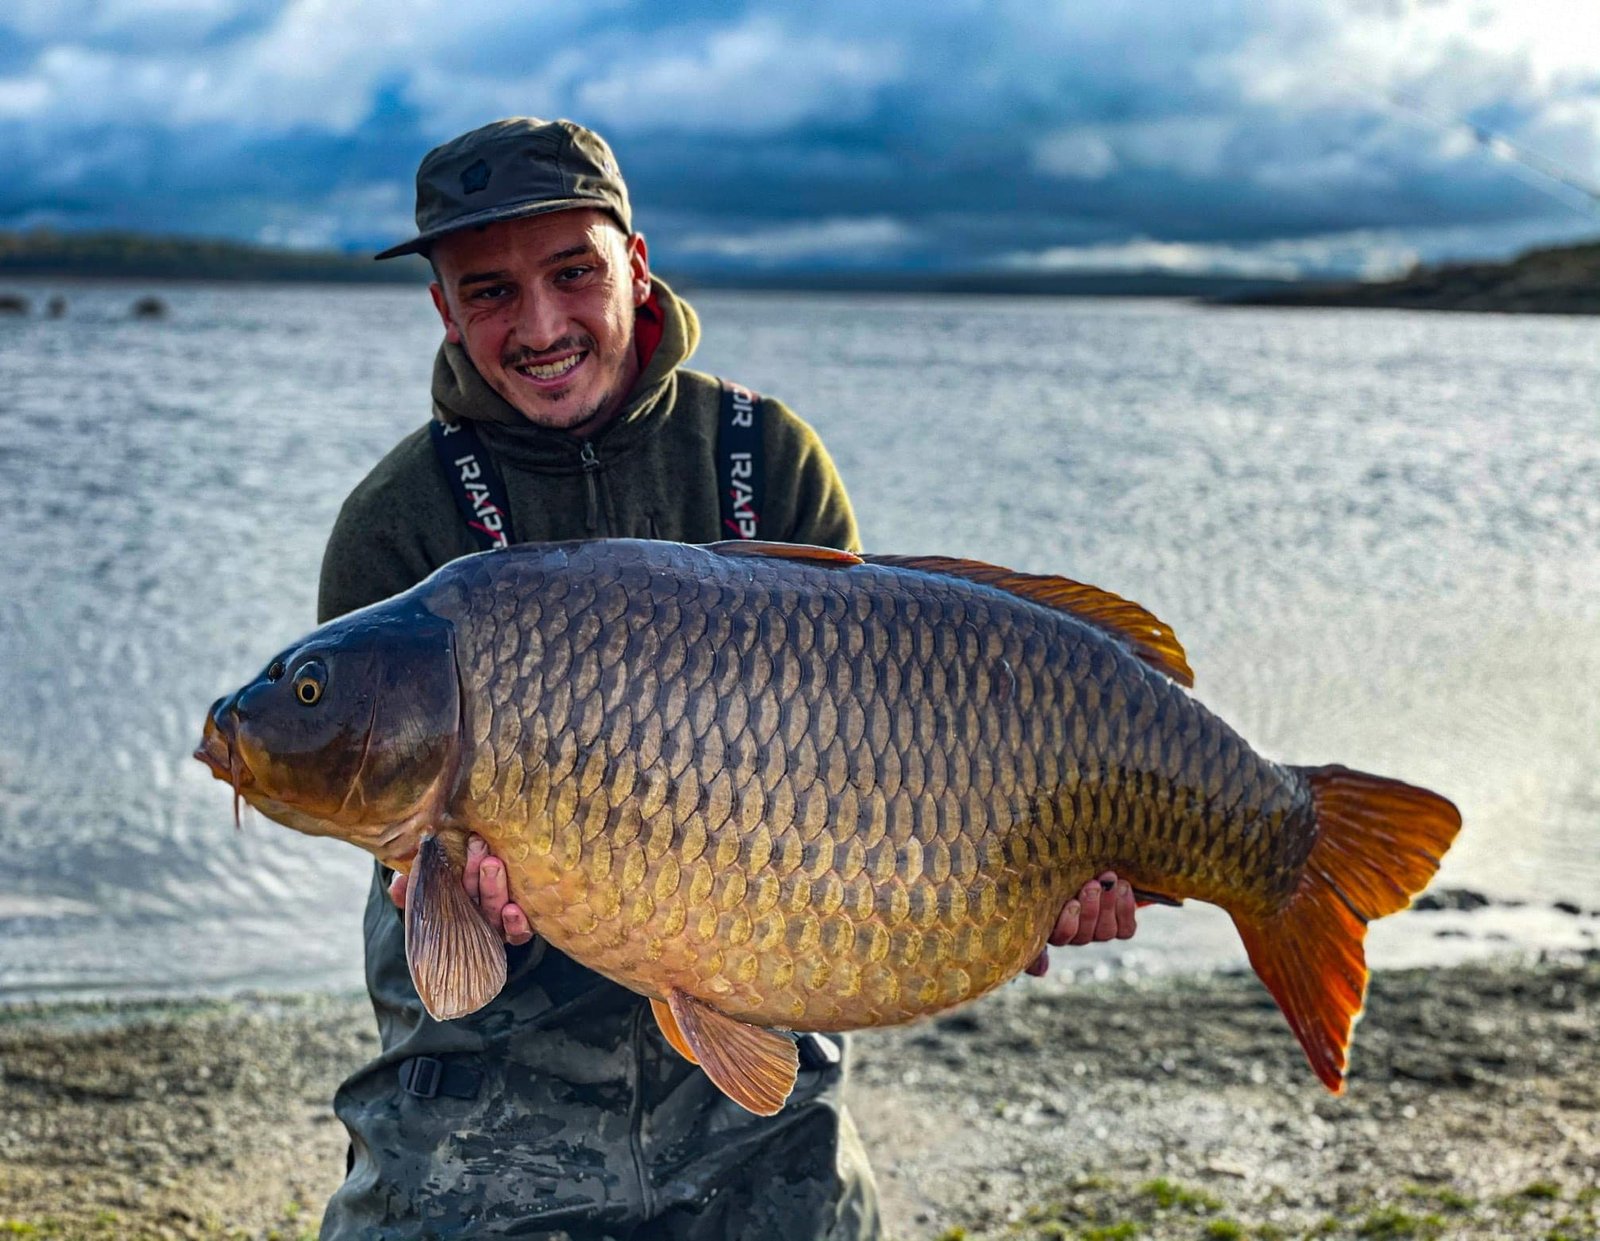 Angler holding carp caught on Orellana Lake in Spain, Europe